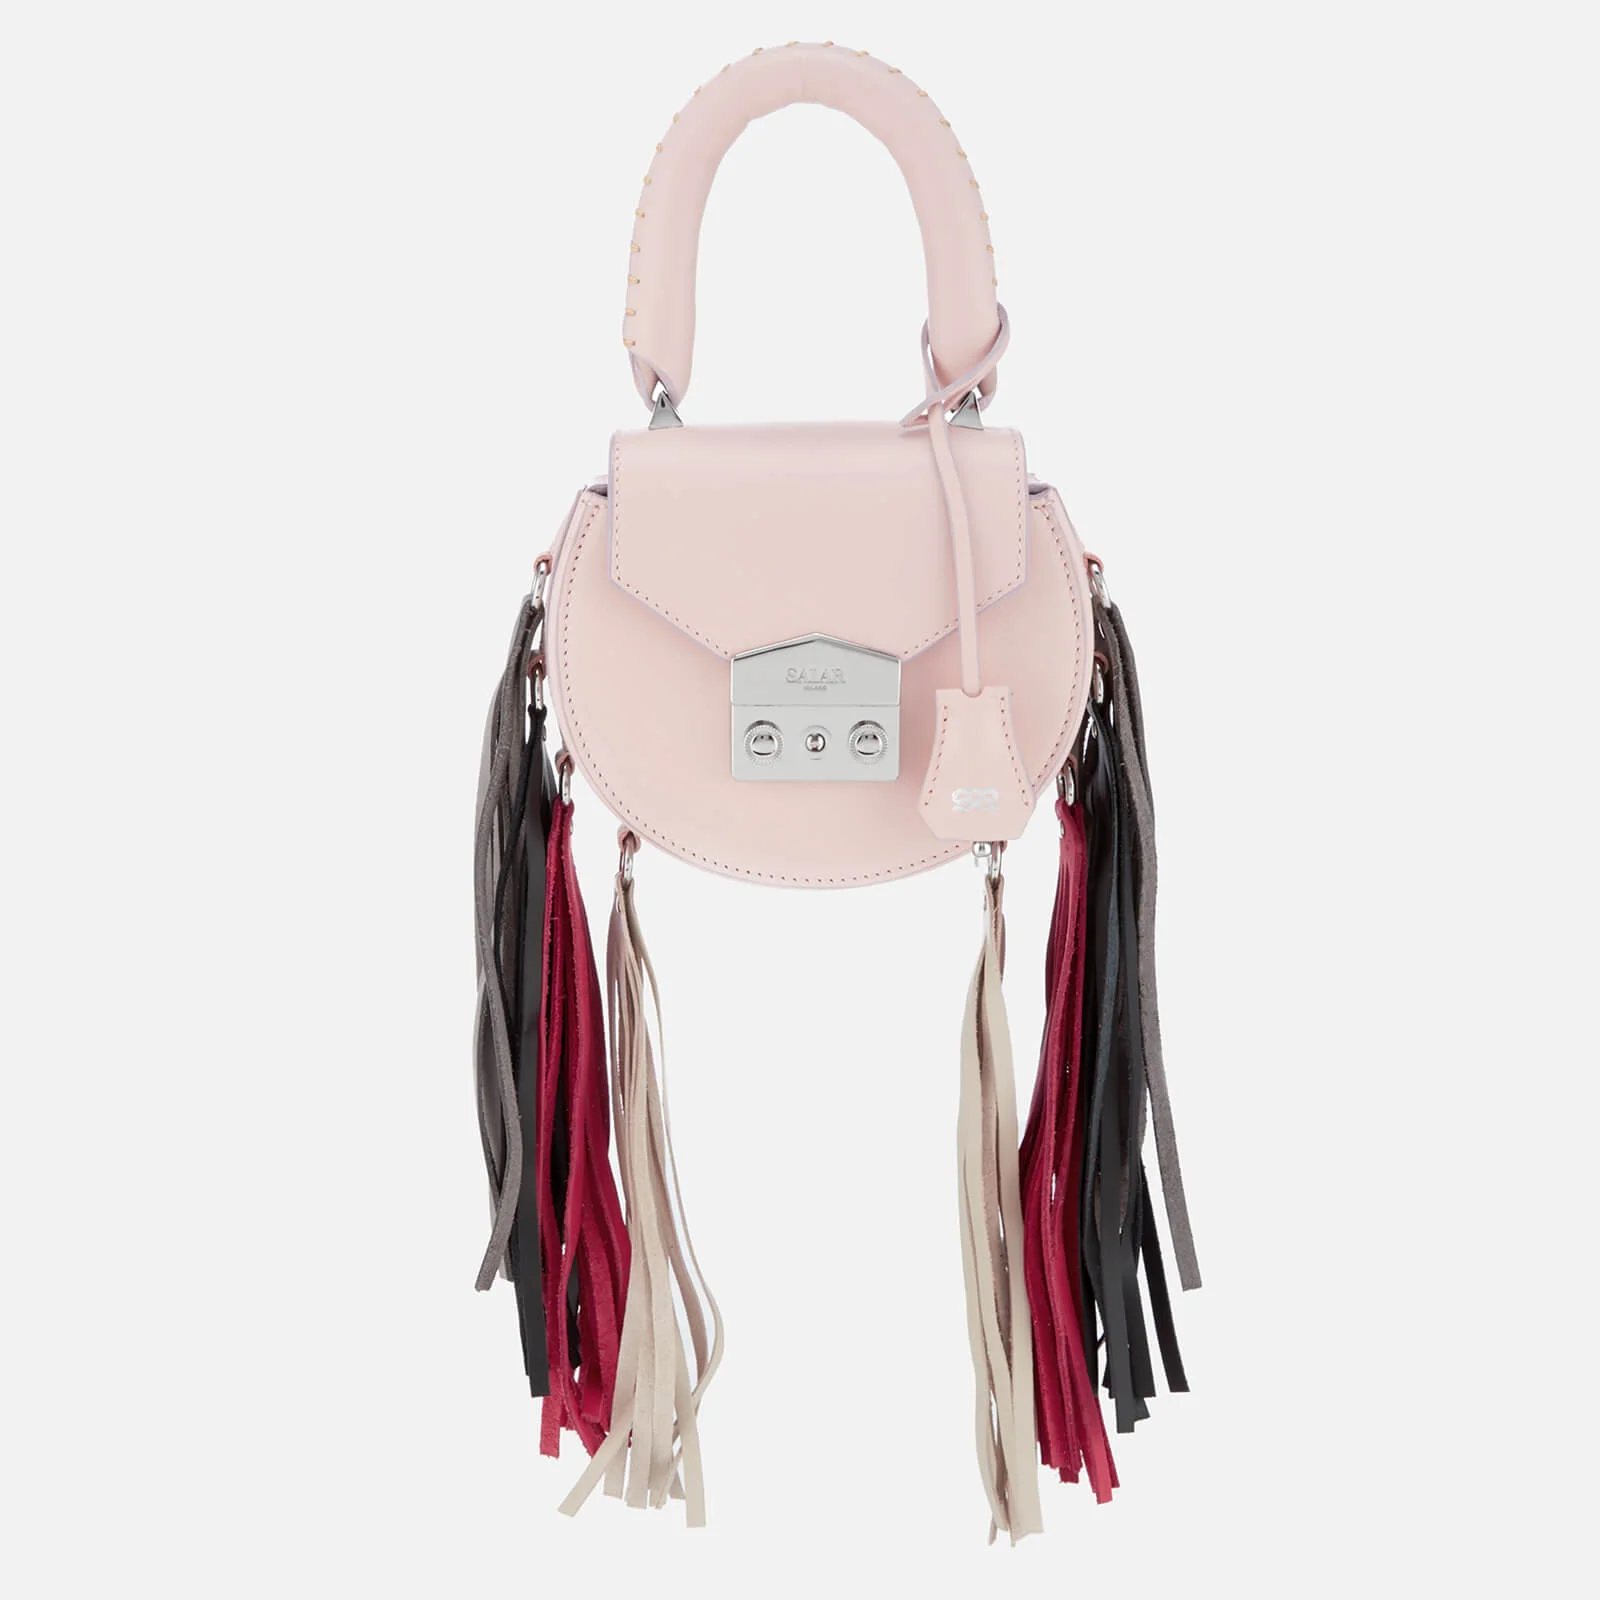 SALAR Women's Mimi Mini Rainbow Bag - Pink/Multi Image 1